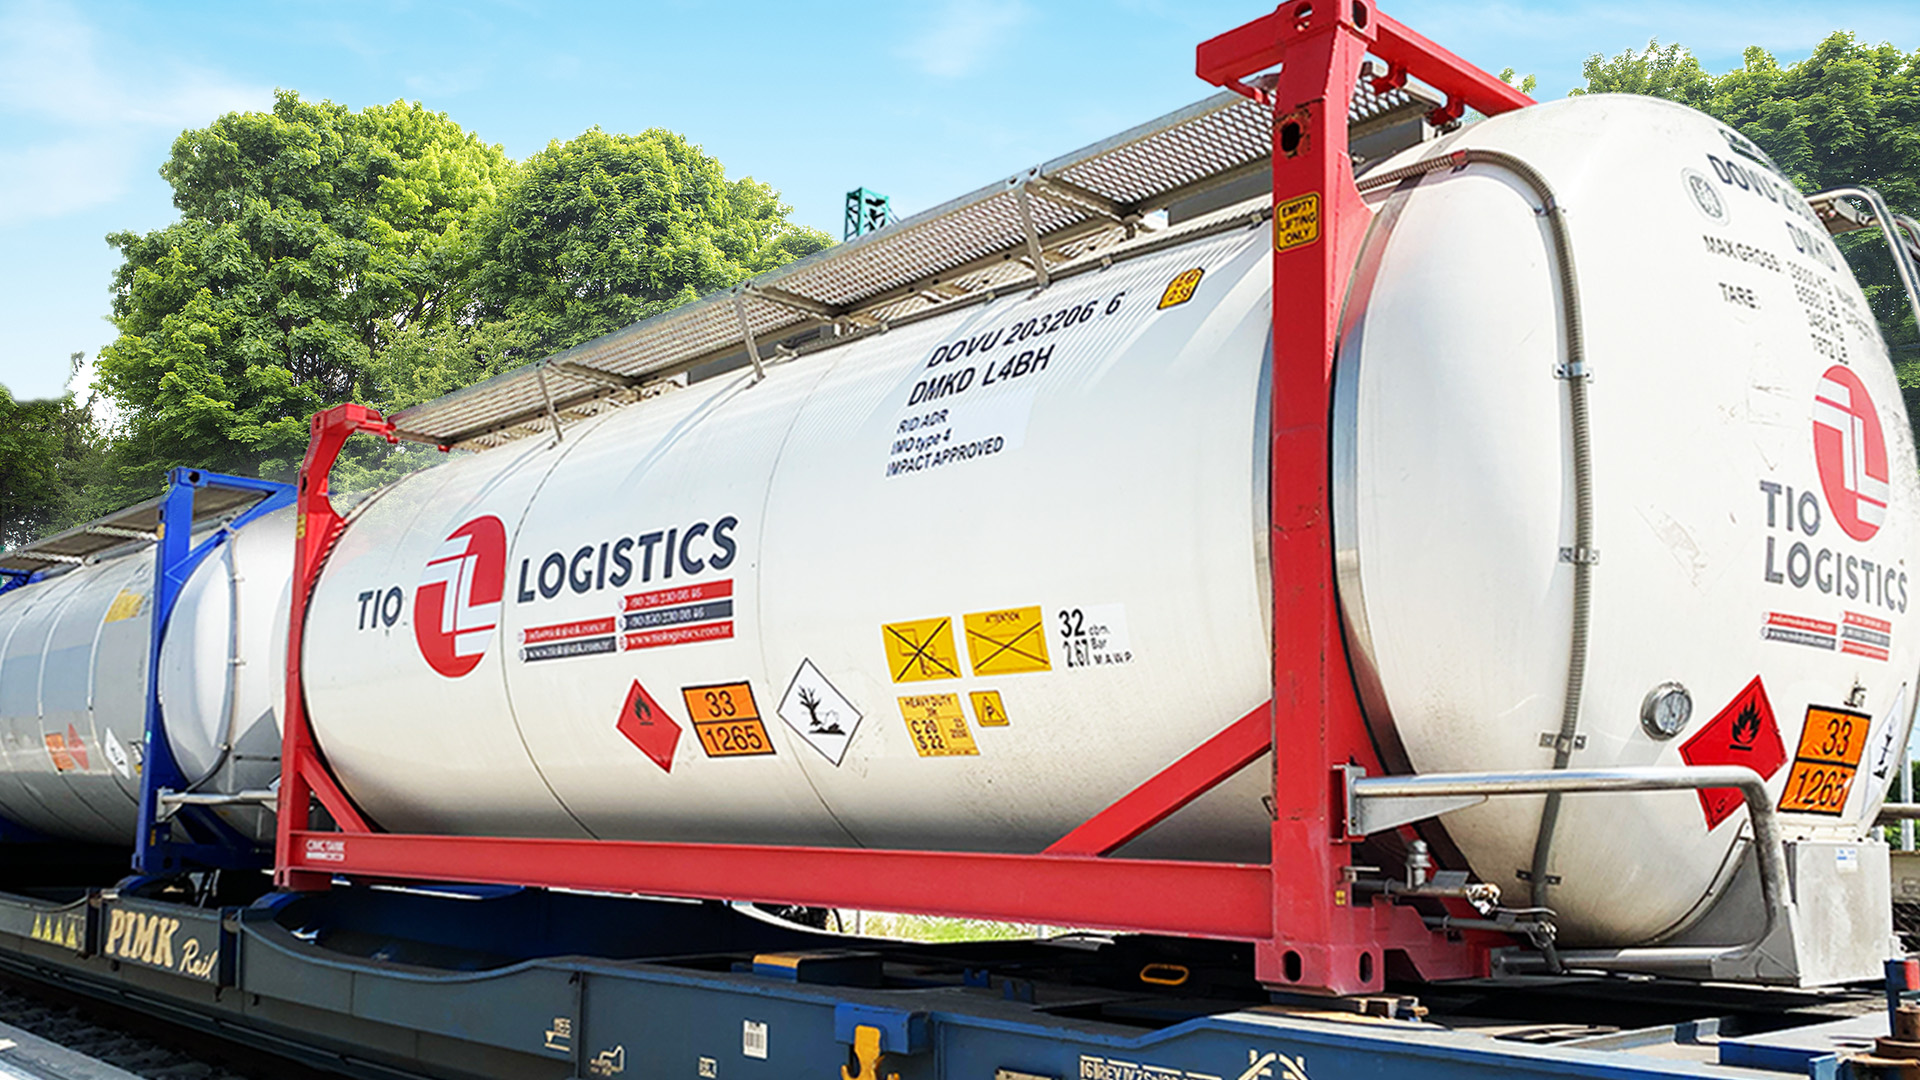 Tio Logistics has earned the Green Logistics Certificate.